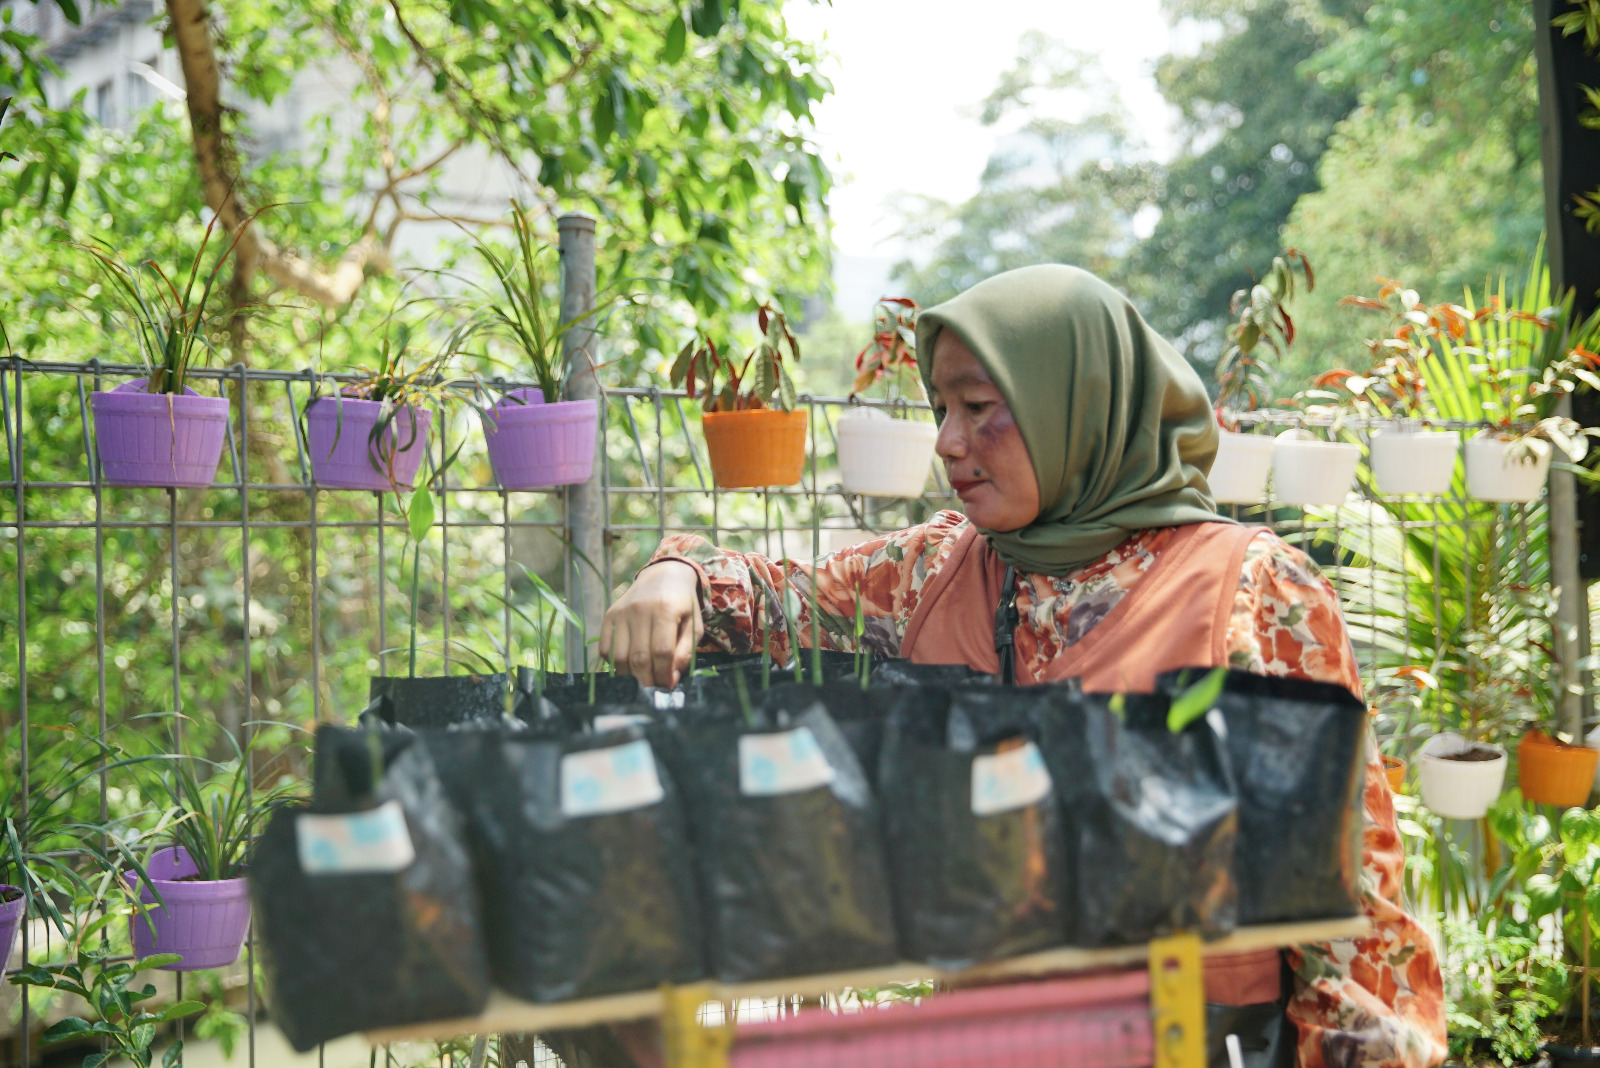 Susuri Kampung Palm Eco Green Village Malang, Makin Asri Berkat Program BRInita